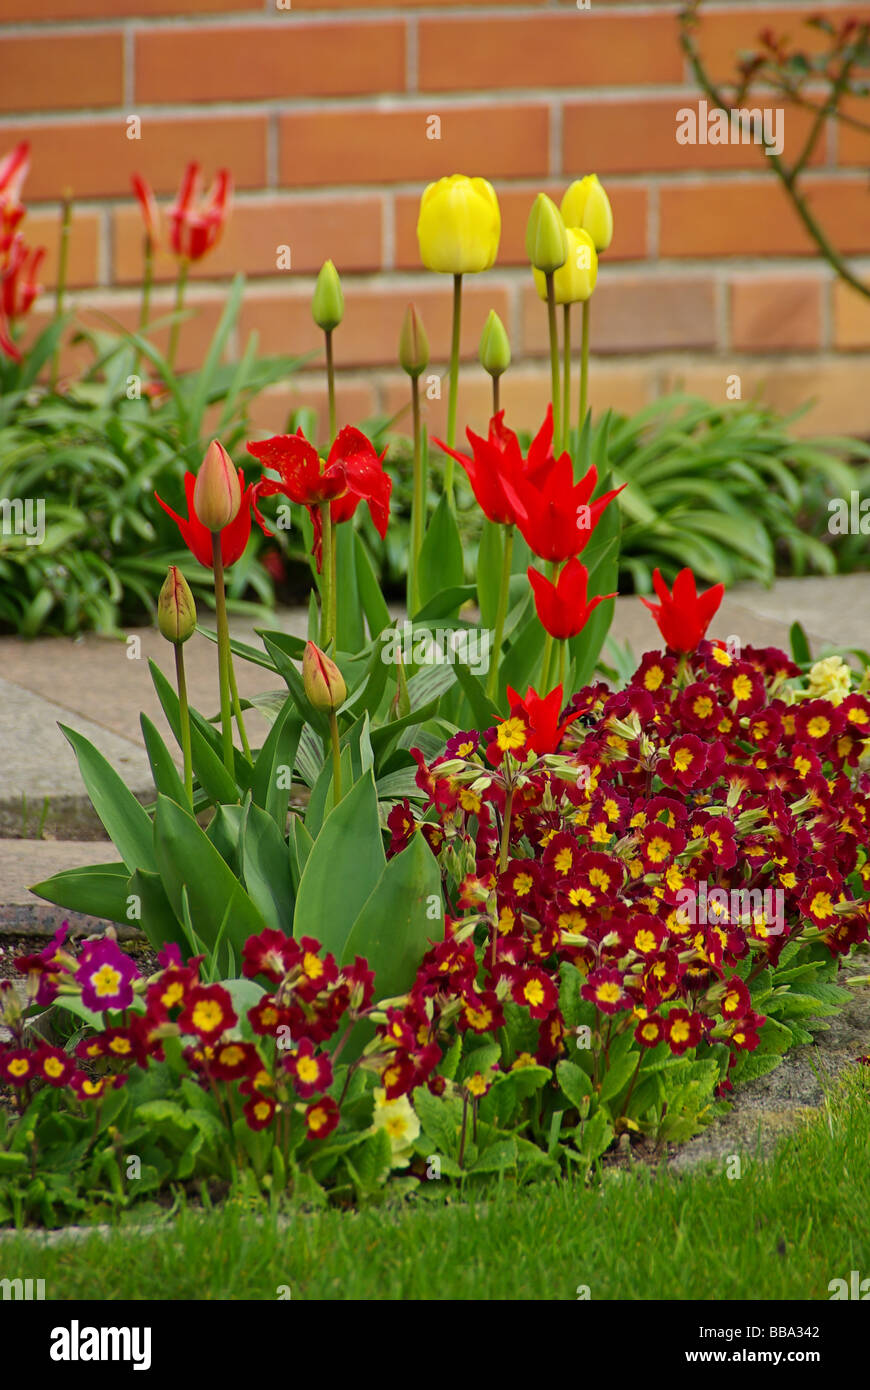 Tulpe und Primel tulip and primrose 03 Stock Photo